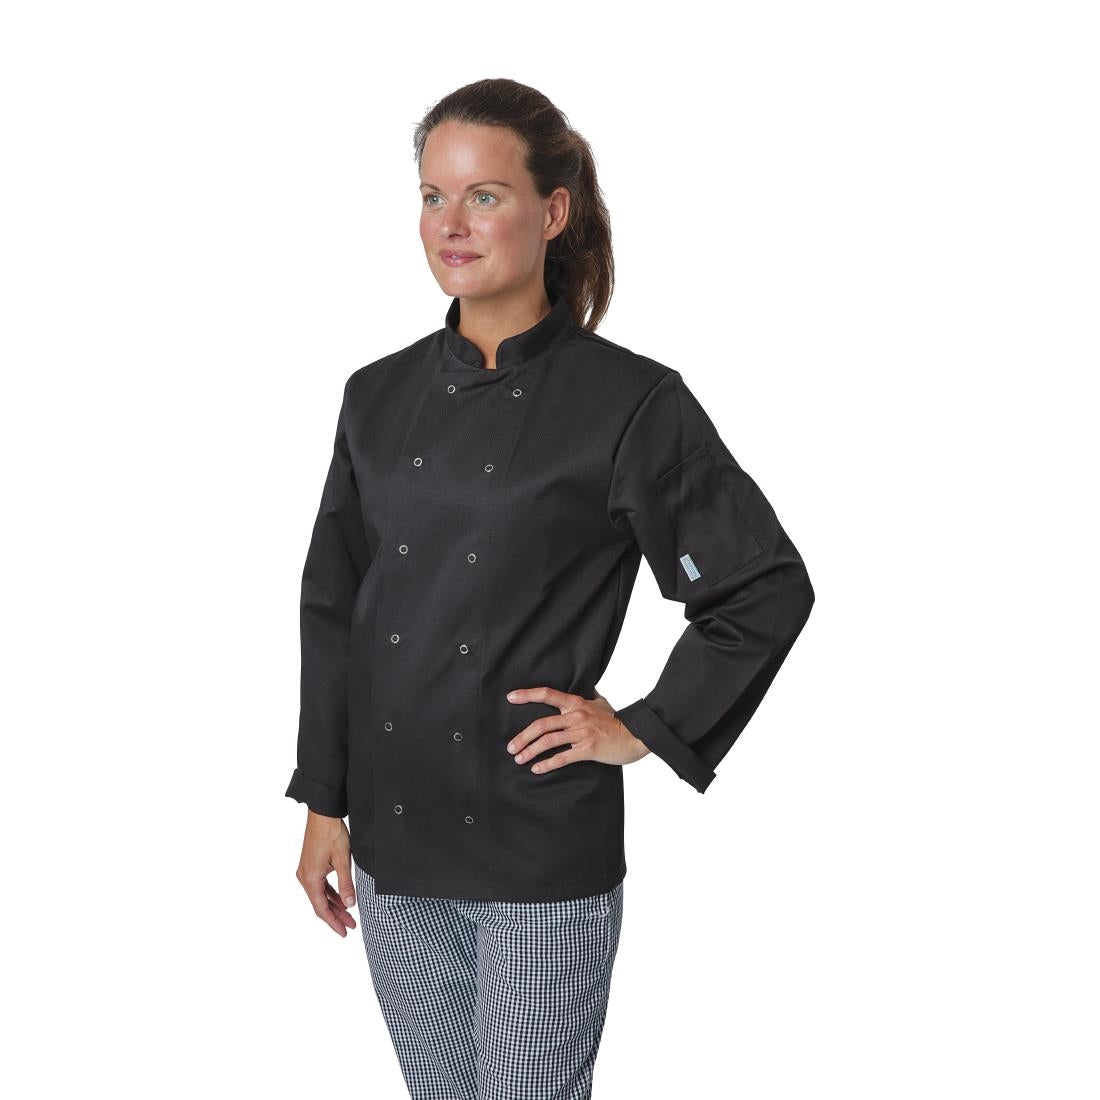 A438-XL Whites Vegas Unisex Chefs Jacket Long Sleeve Black XL JD Catering Equipment Solutions Ltd